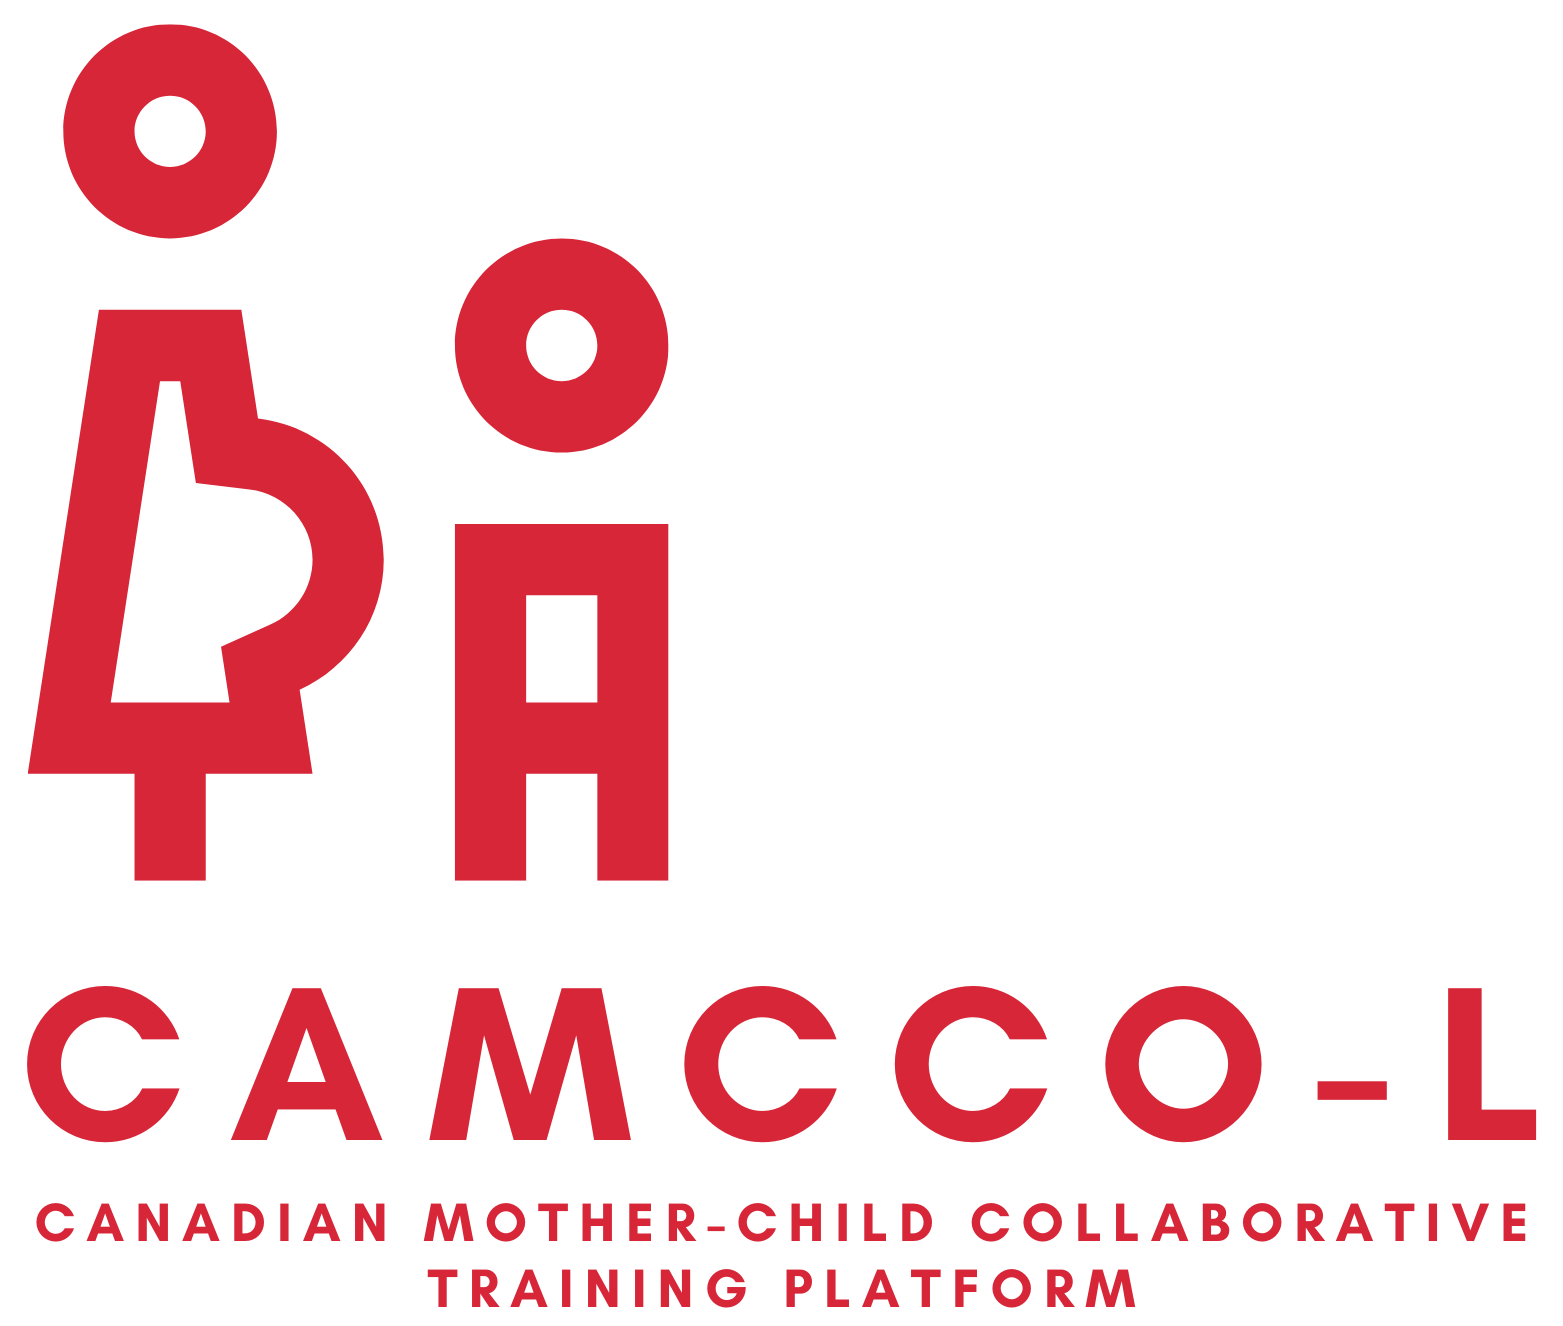 CAMCCO-L